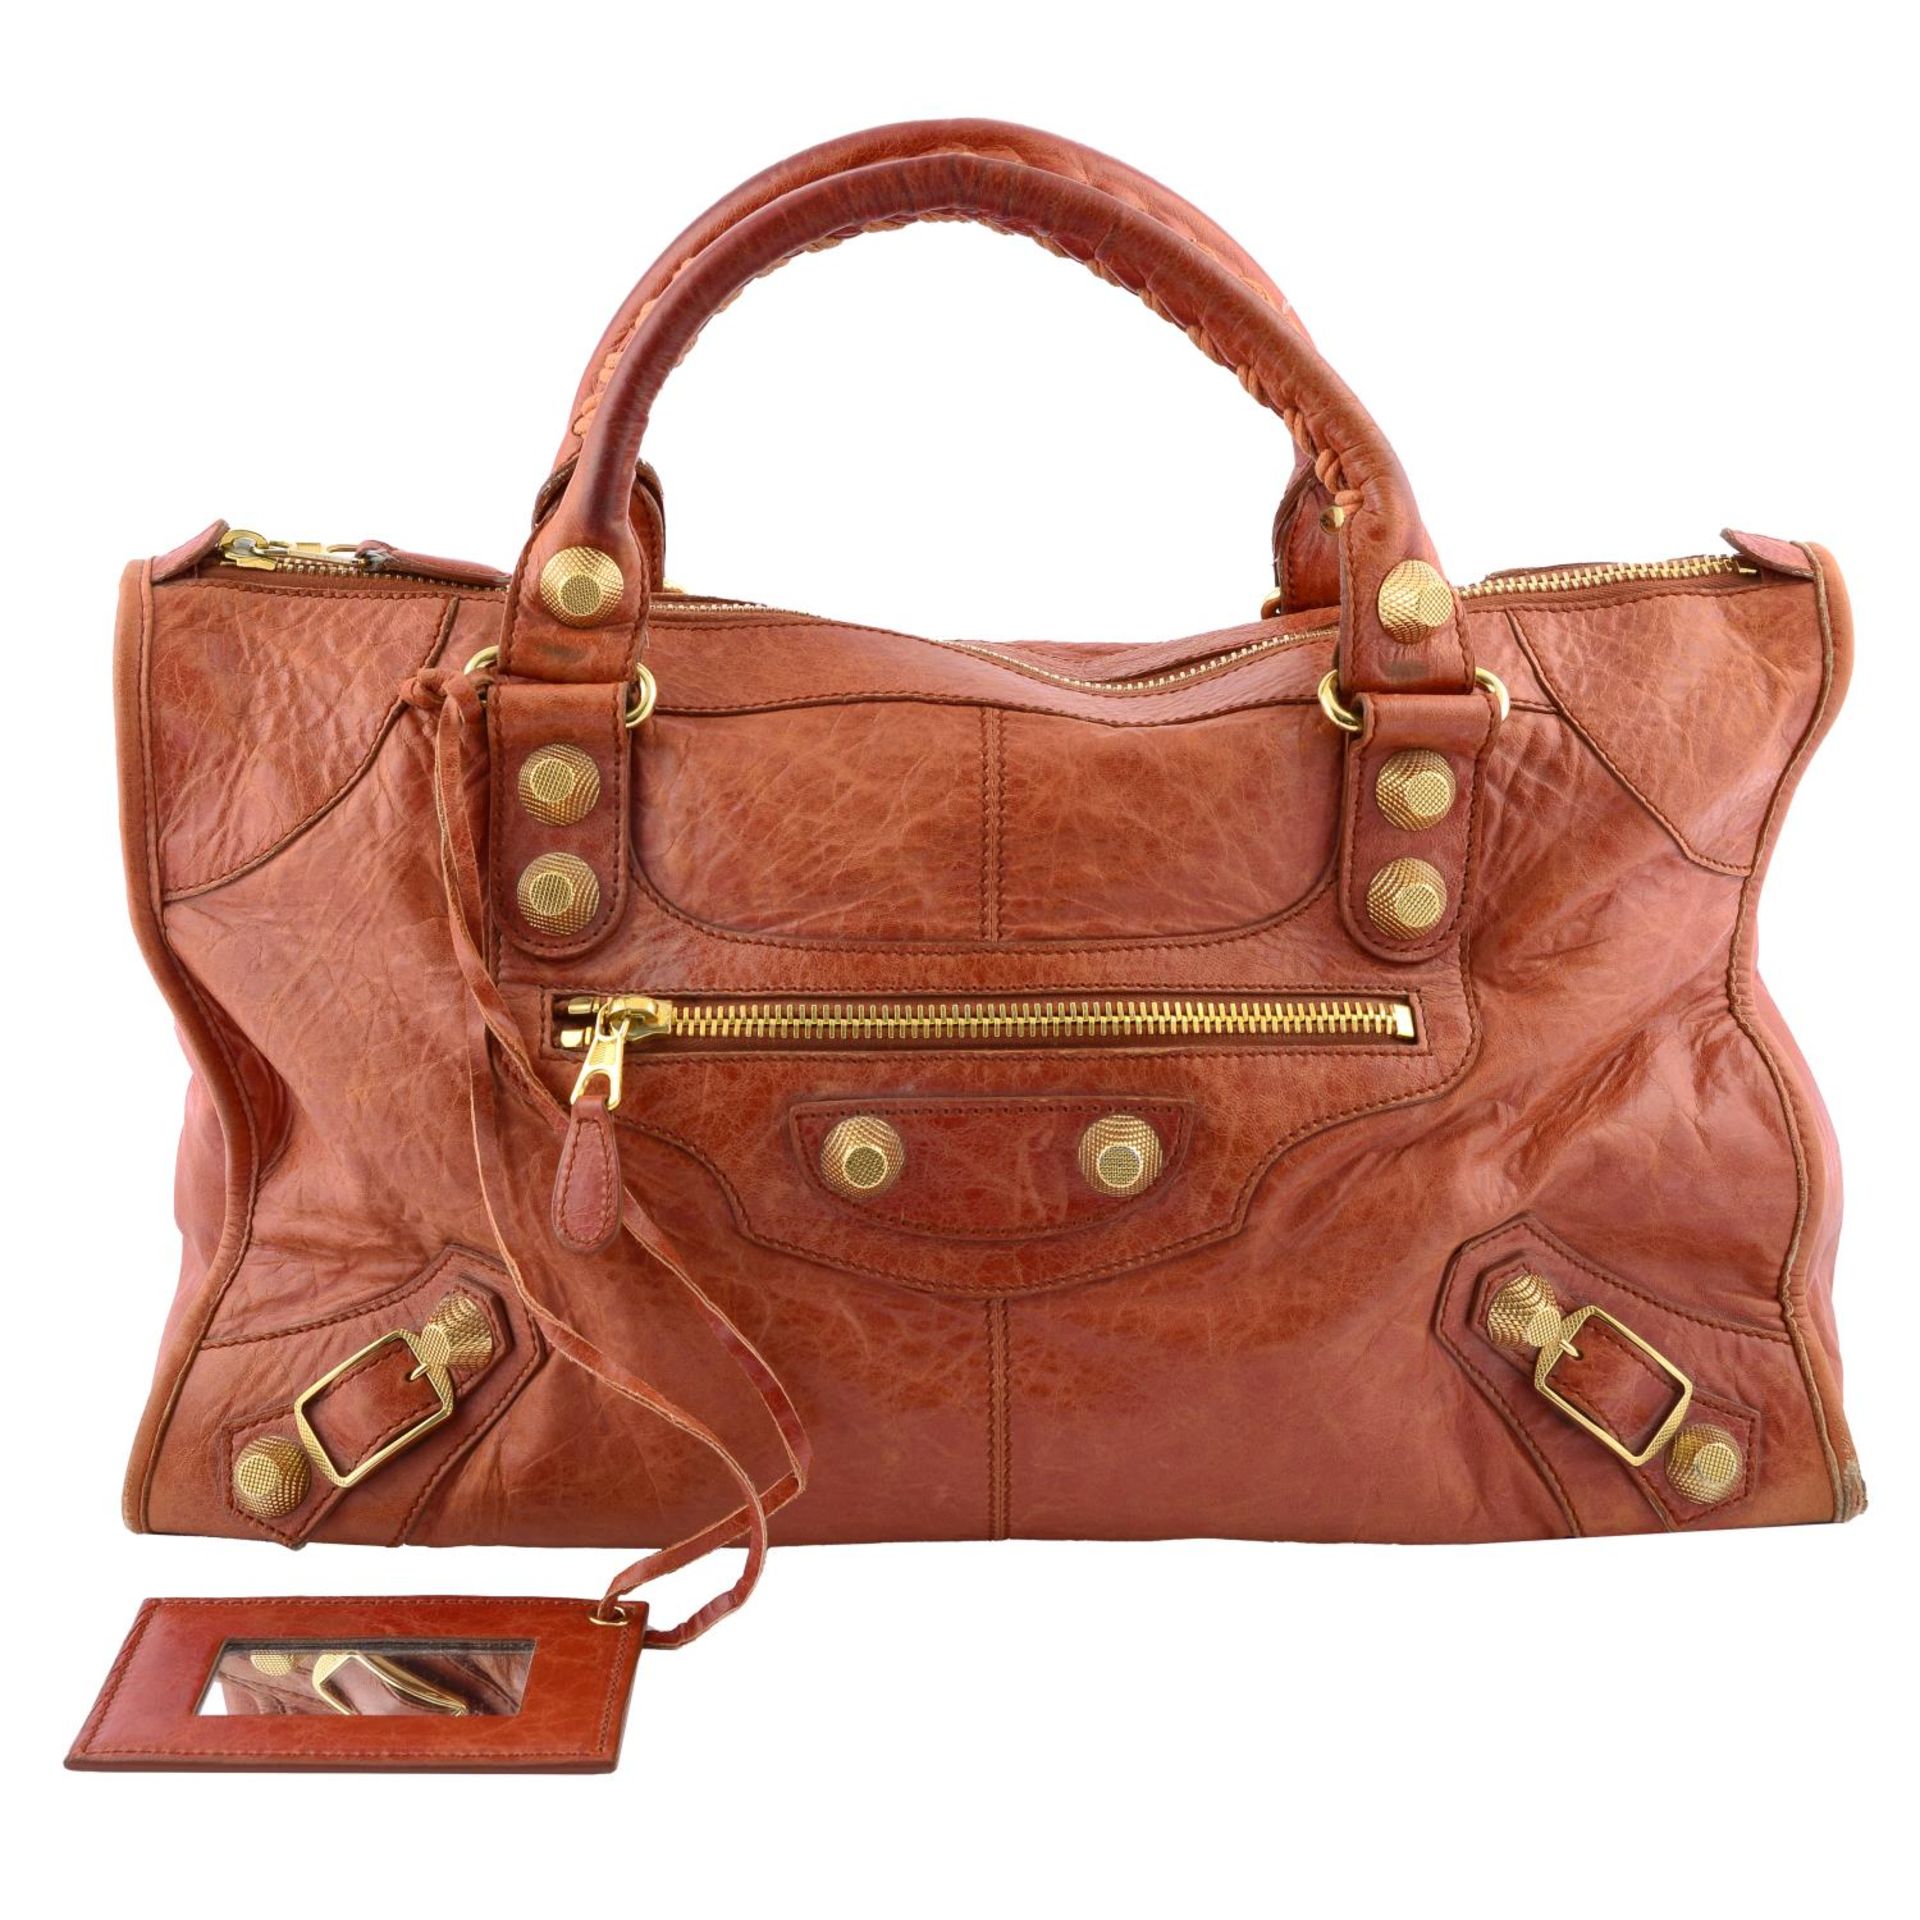 BALENCIAGA - a dark orange Giant Work handbag.